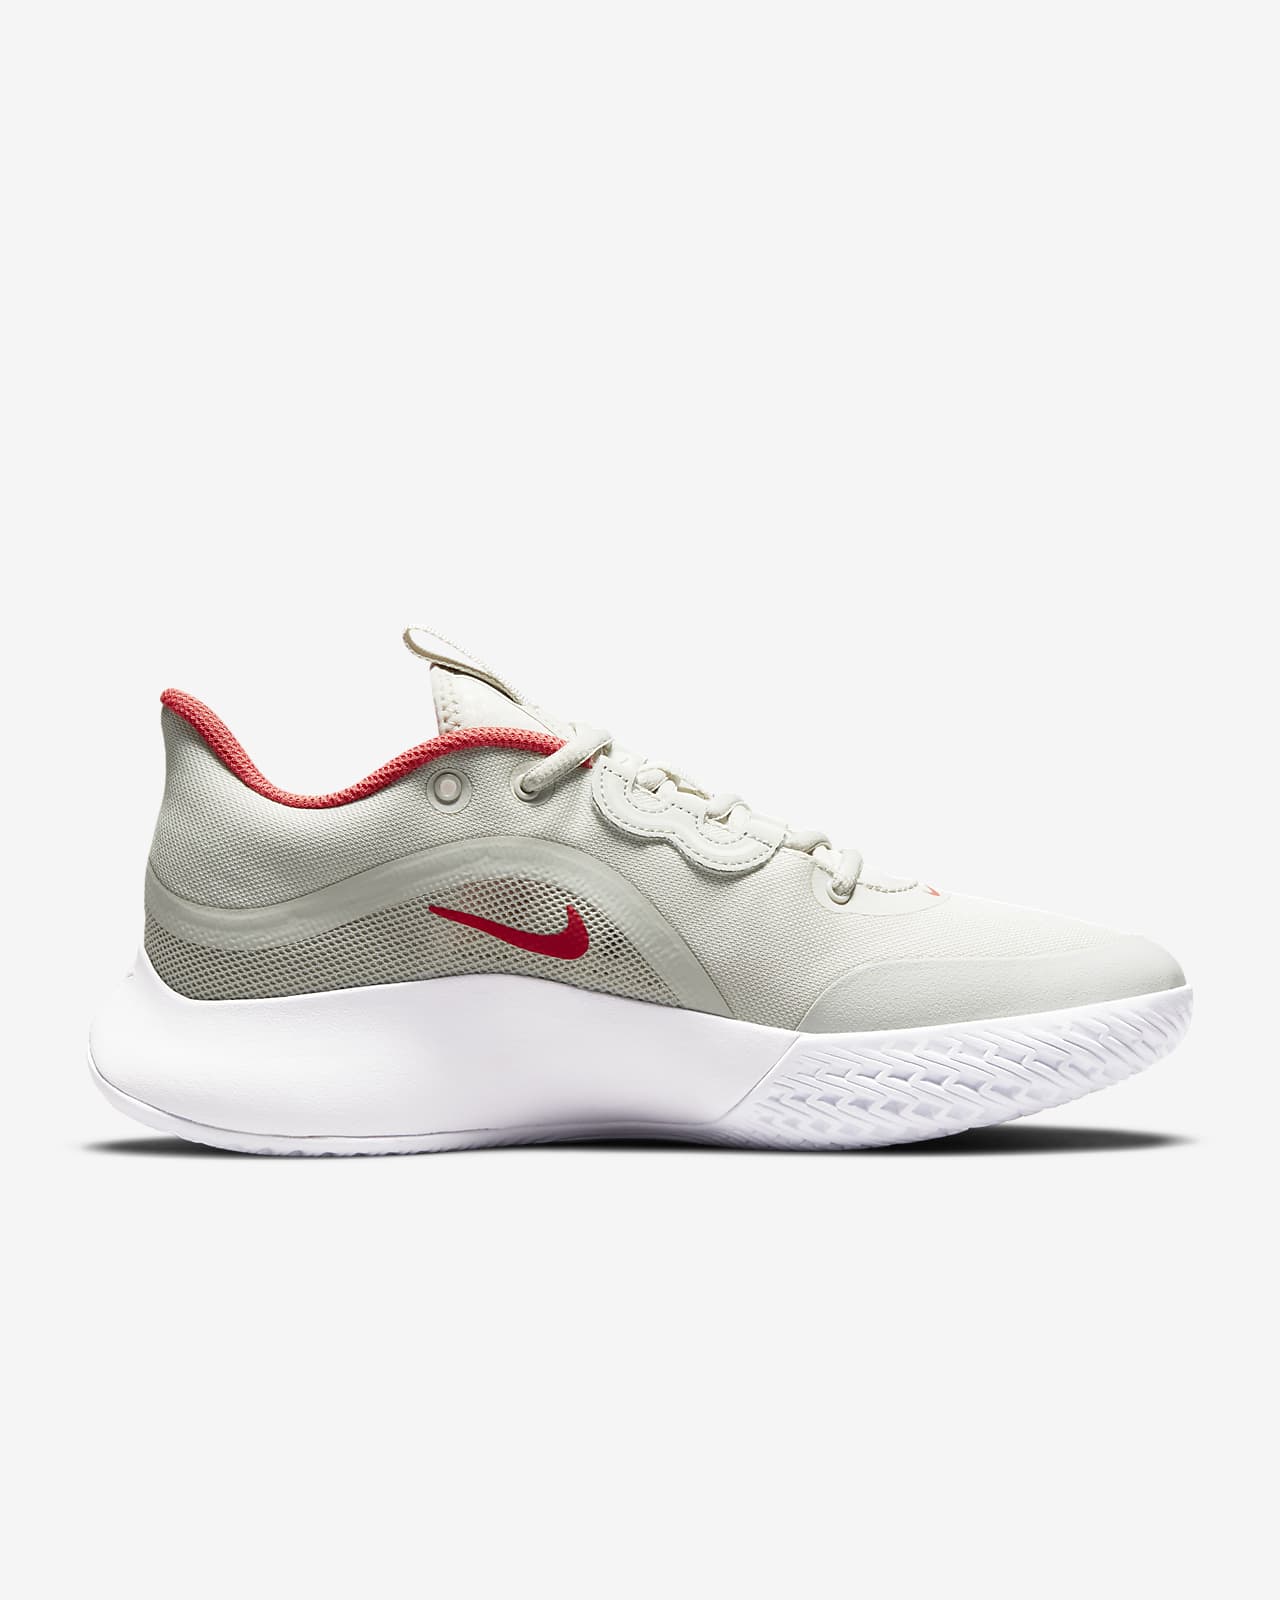 NikeCourt Air Max Volley Women's Hard Court Tennis Shoe